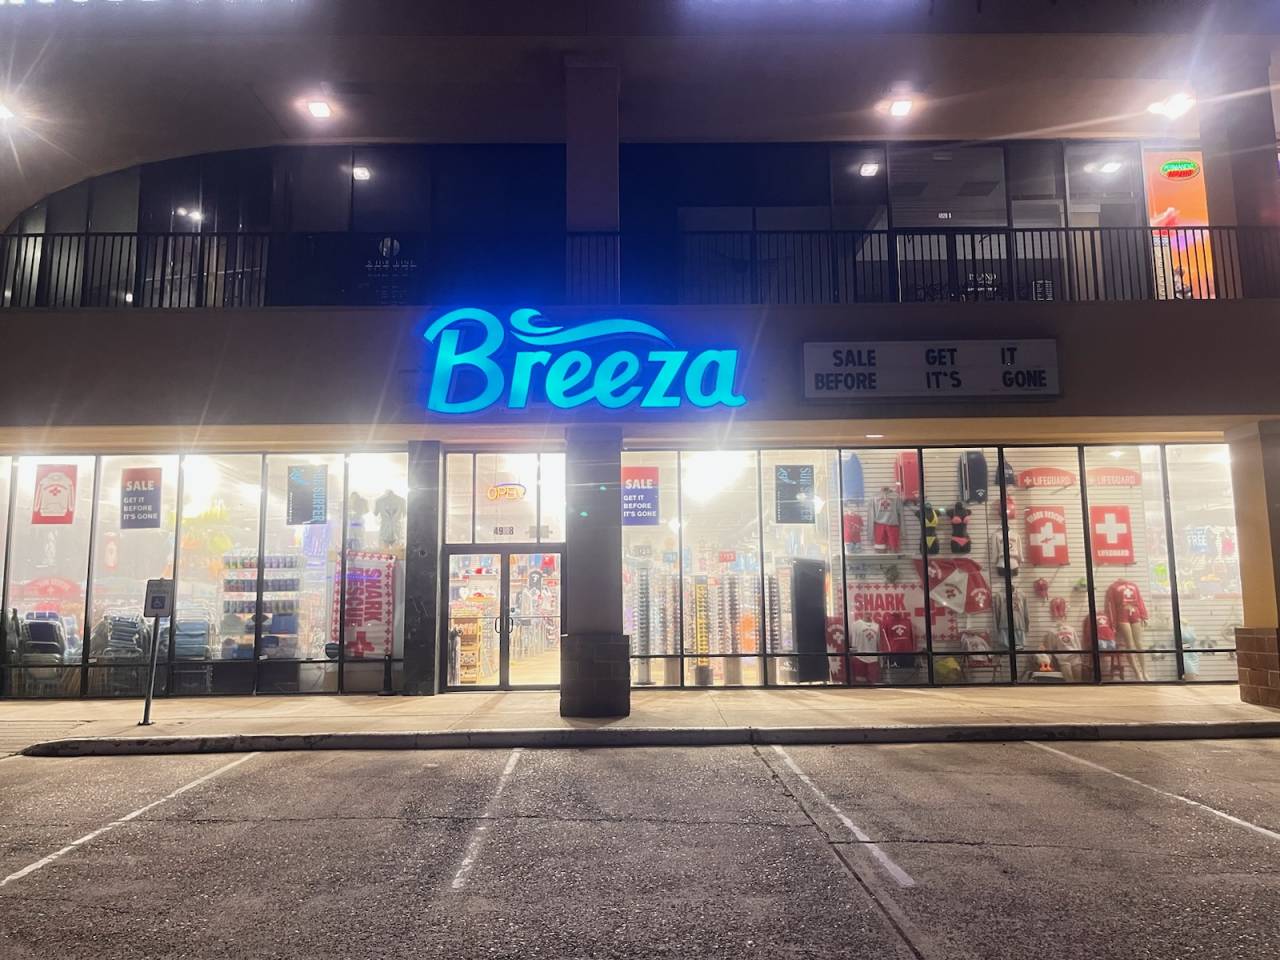 Breeza Beachwear